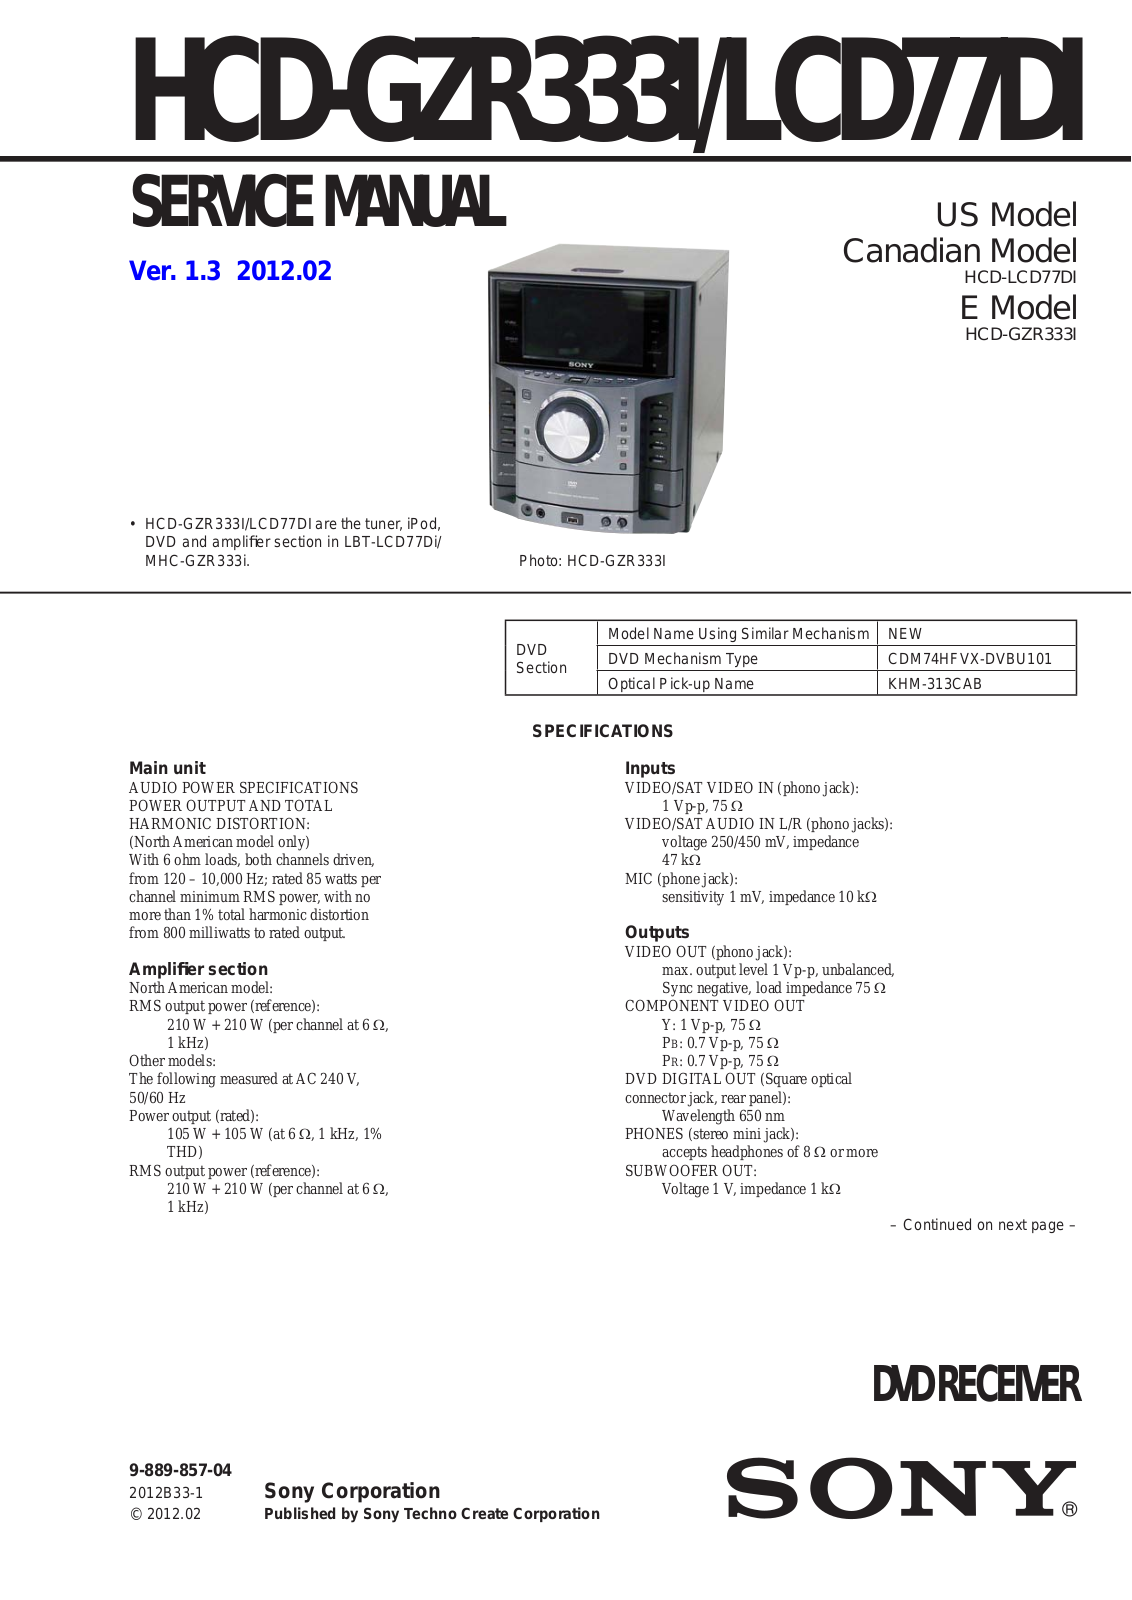 Sony HCD-GZR333I, HCD-LCD77DI Service Manual